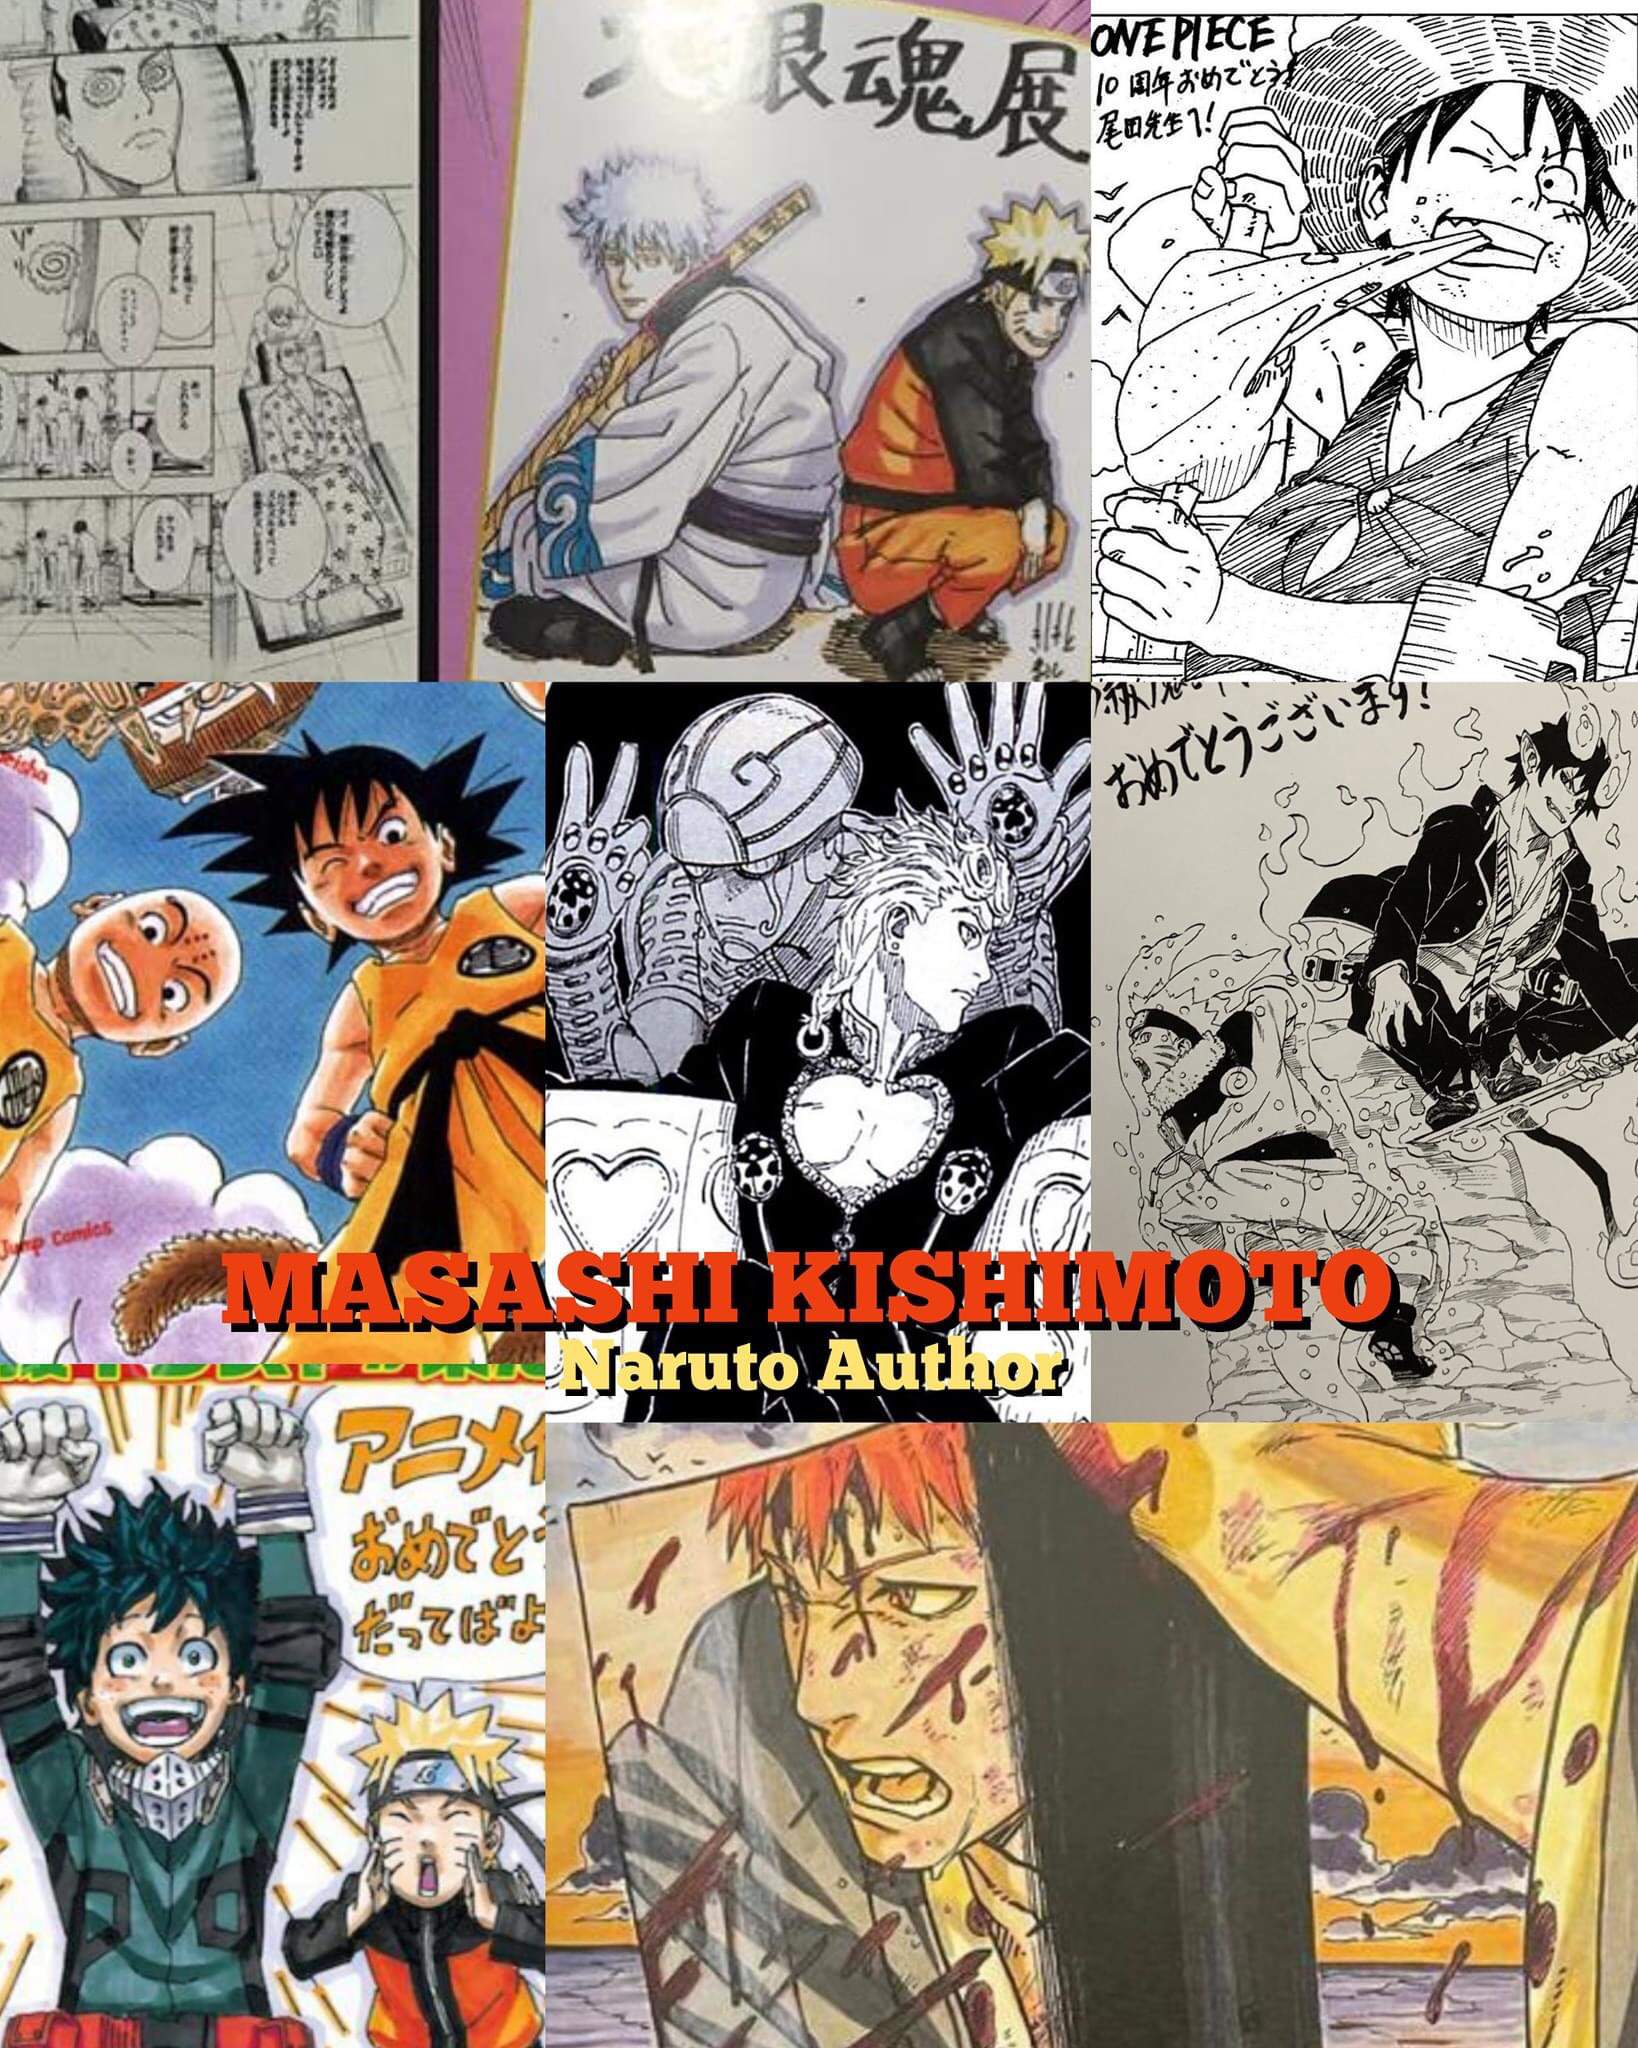 Manga artists drawing other series | Anime Amino